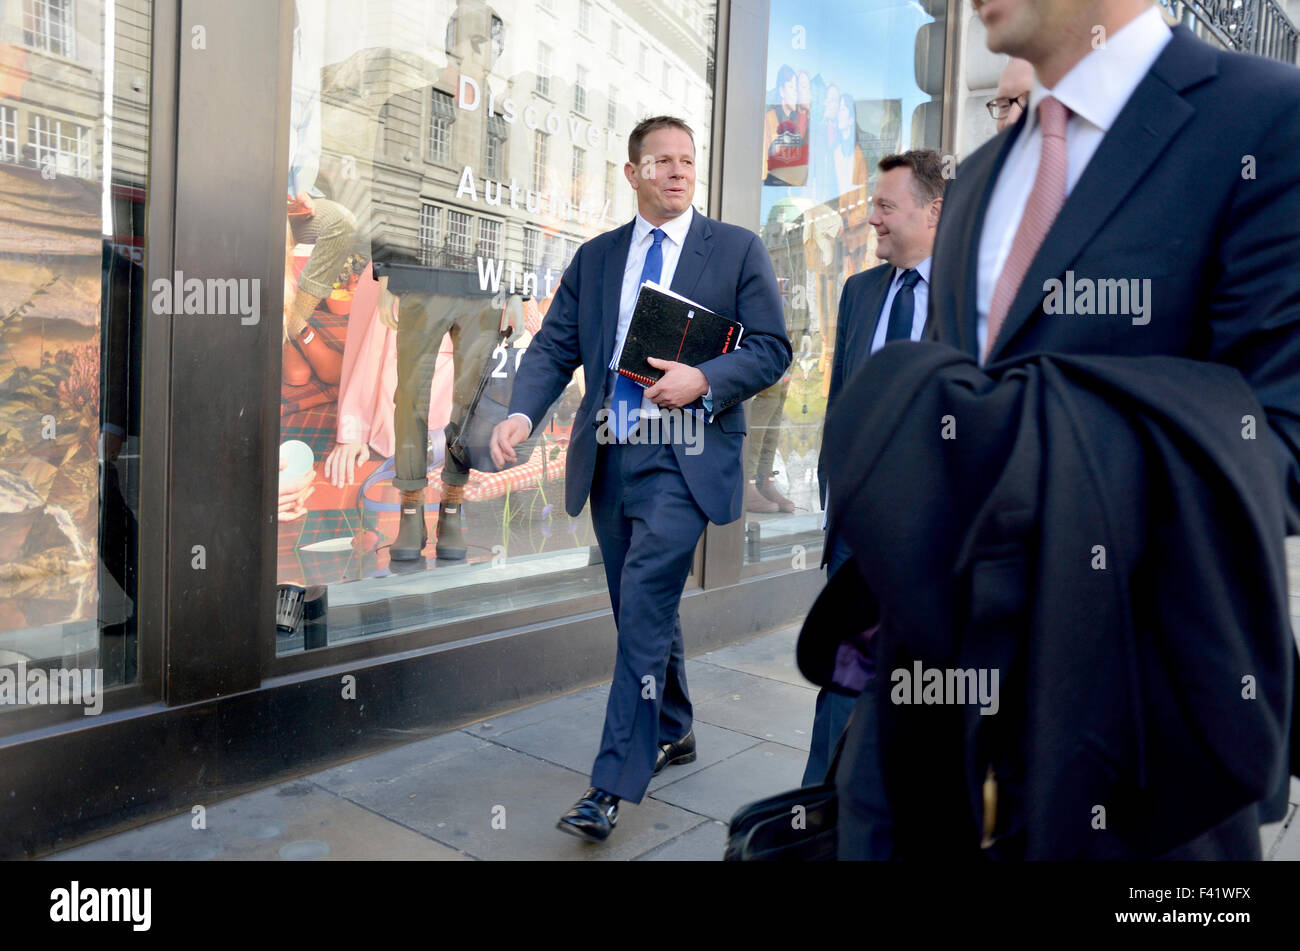 London, England, UK. Businessmen walking in the street Stock Photo